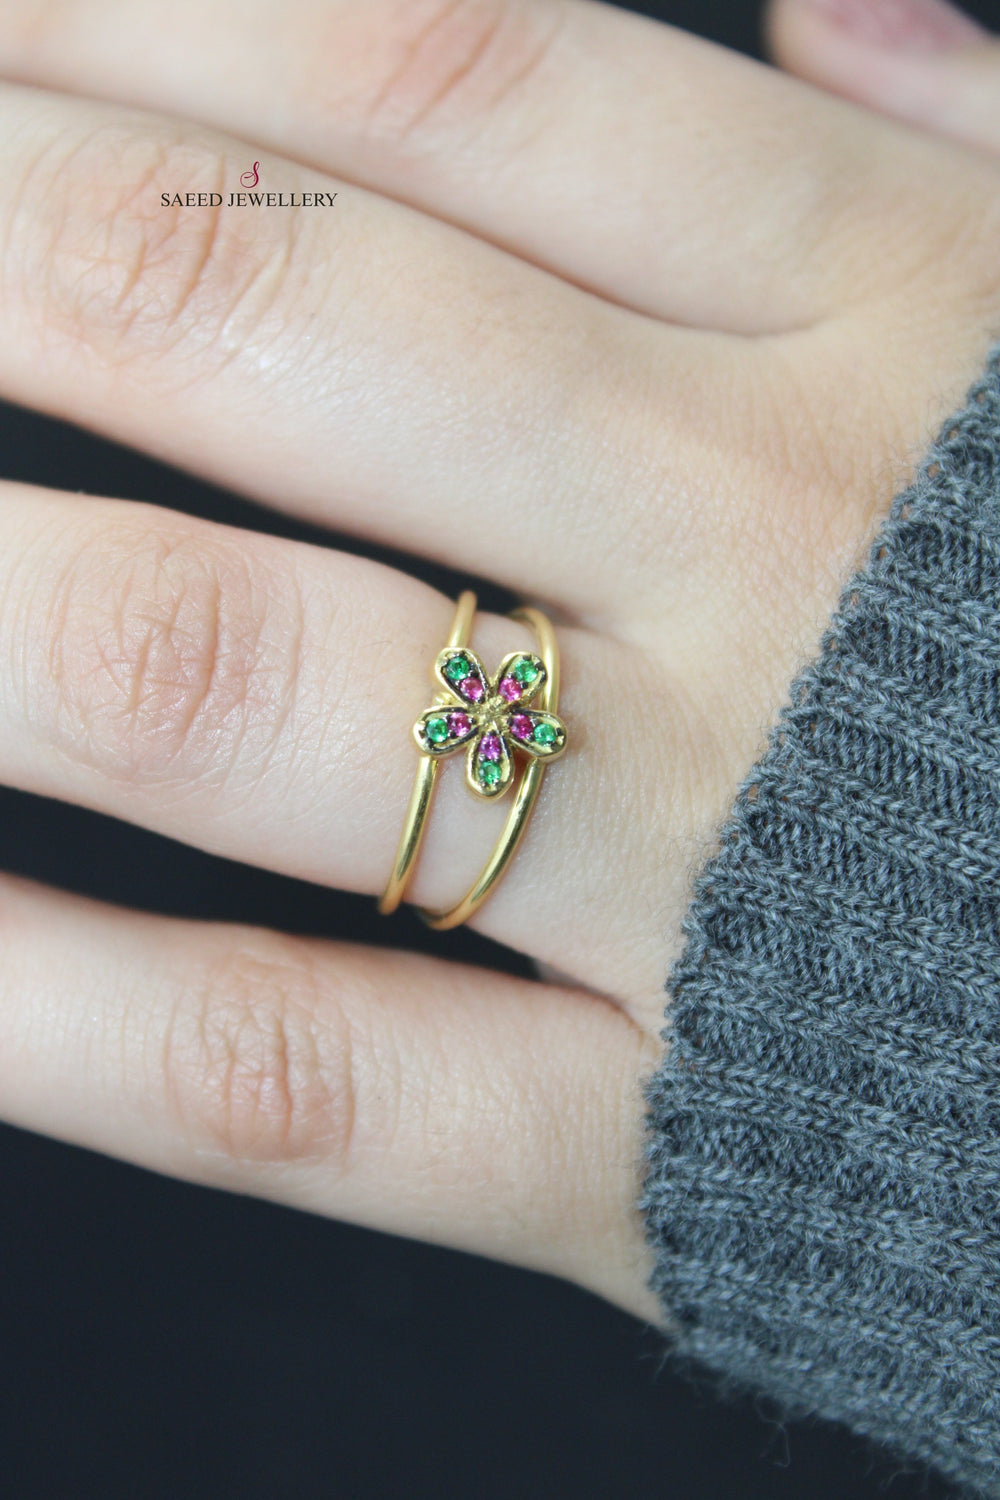 18K Gold Enamel Rose Ring by Saeed Jewelry - Image 2